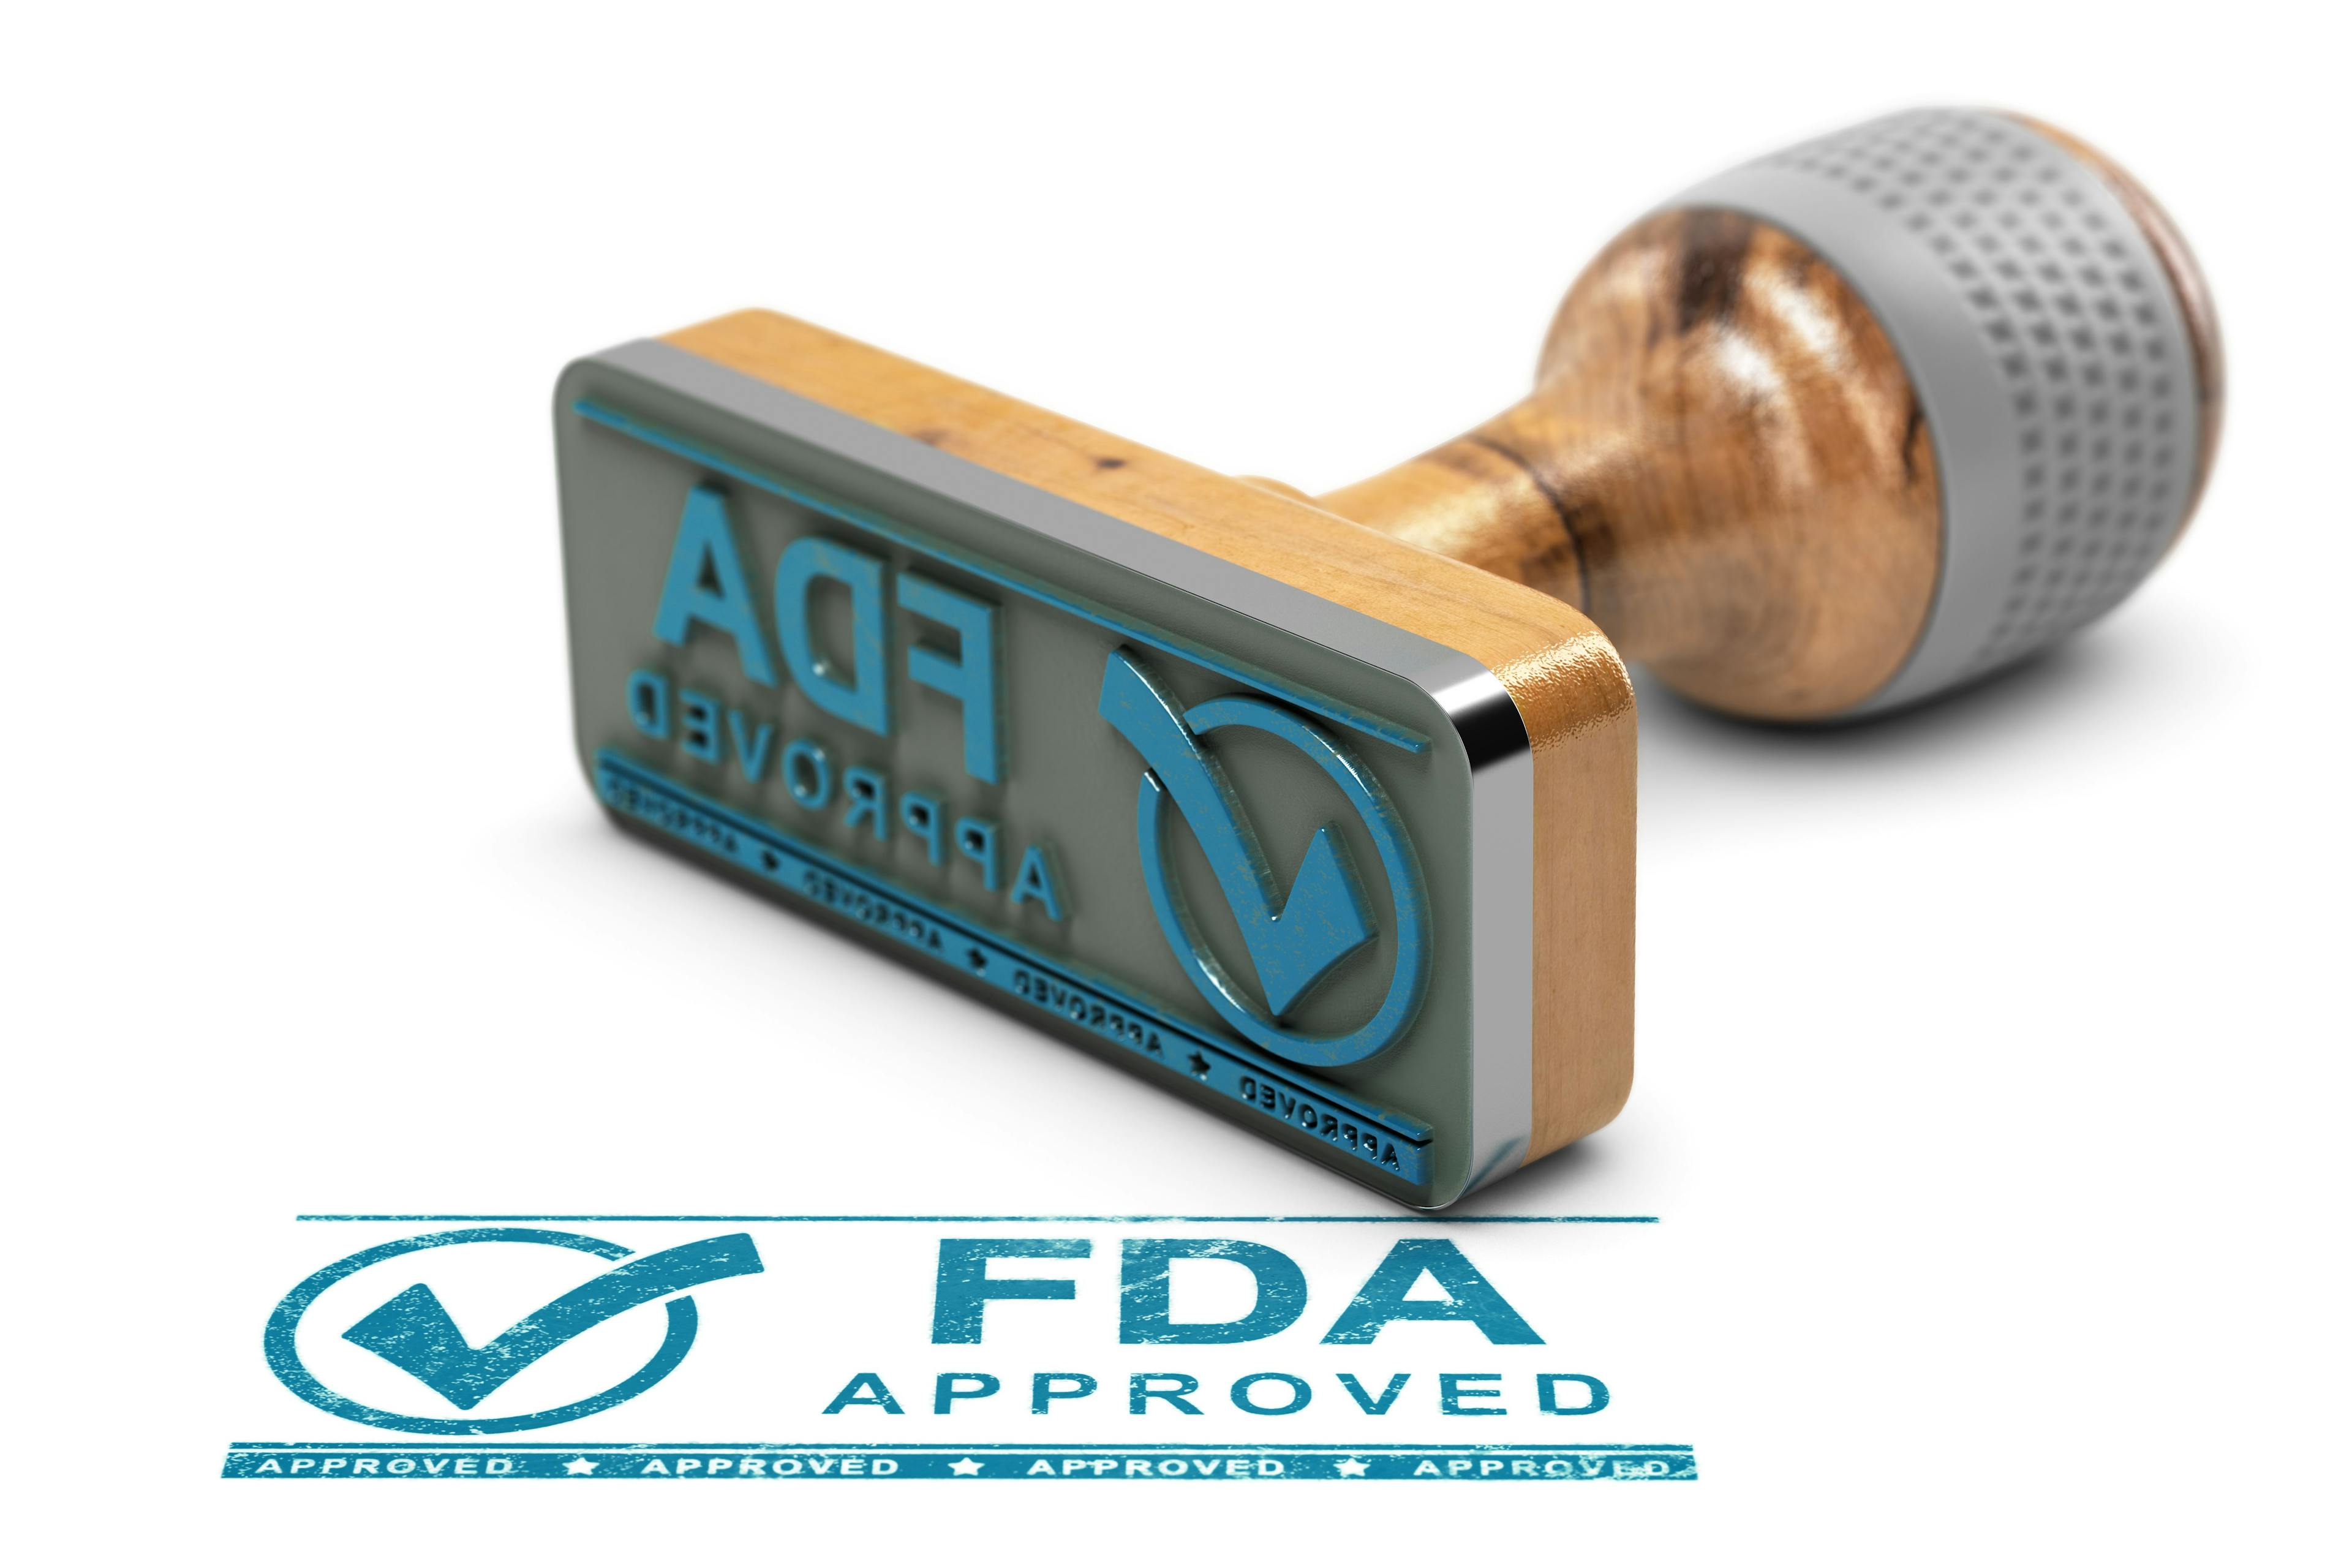 Roflumilast Foam 0.3% Secures Major FDA Approval to Treat Seborrheic Dermatitis